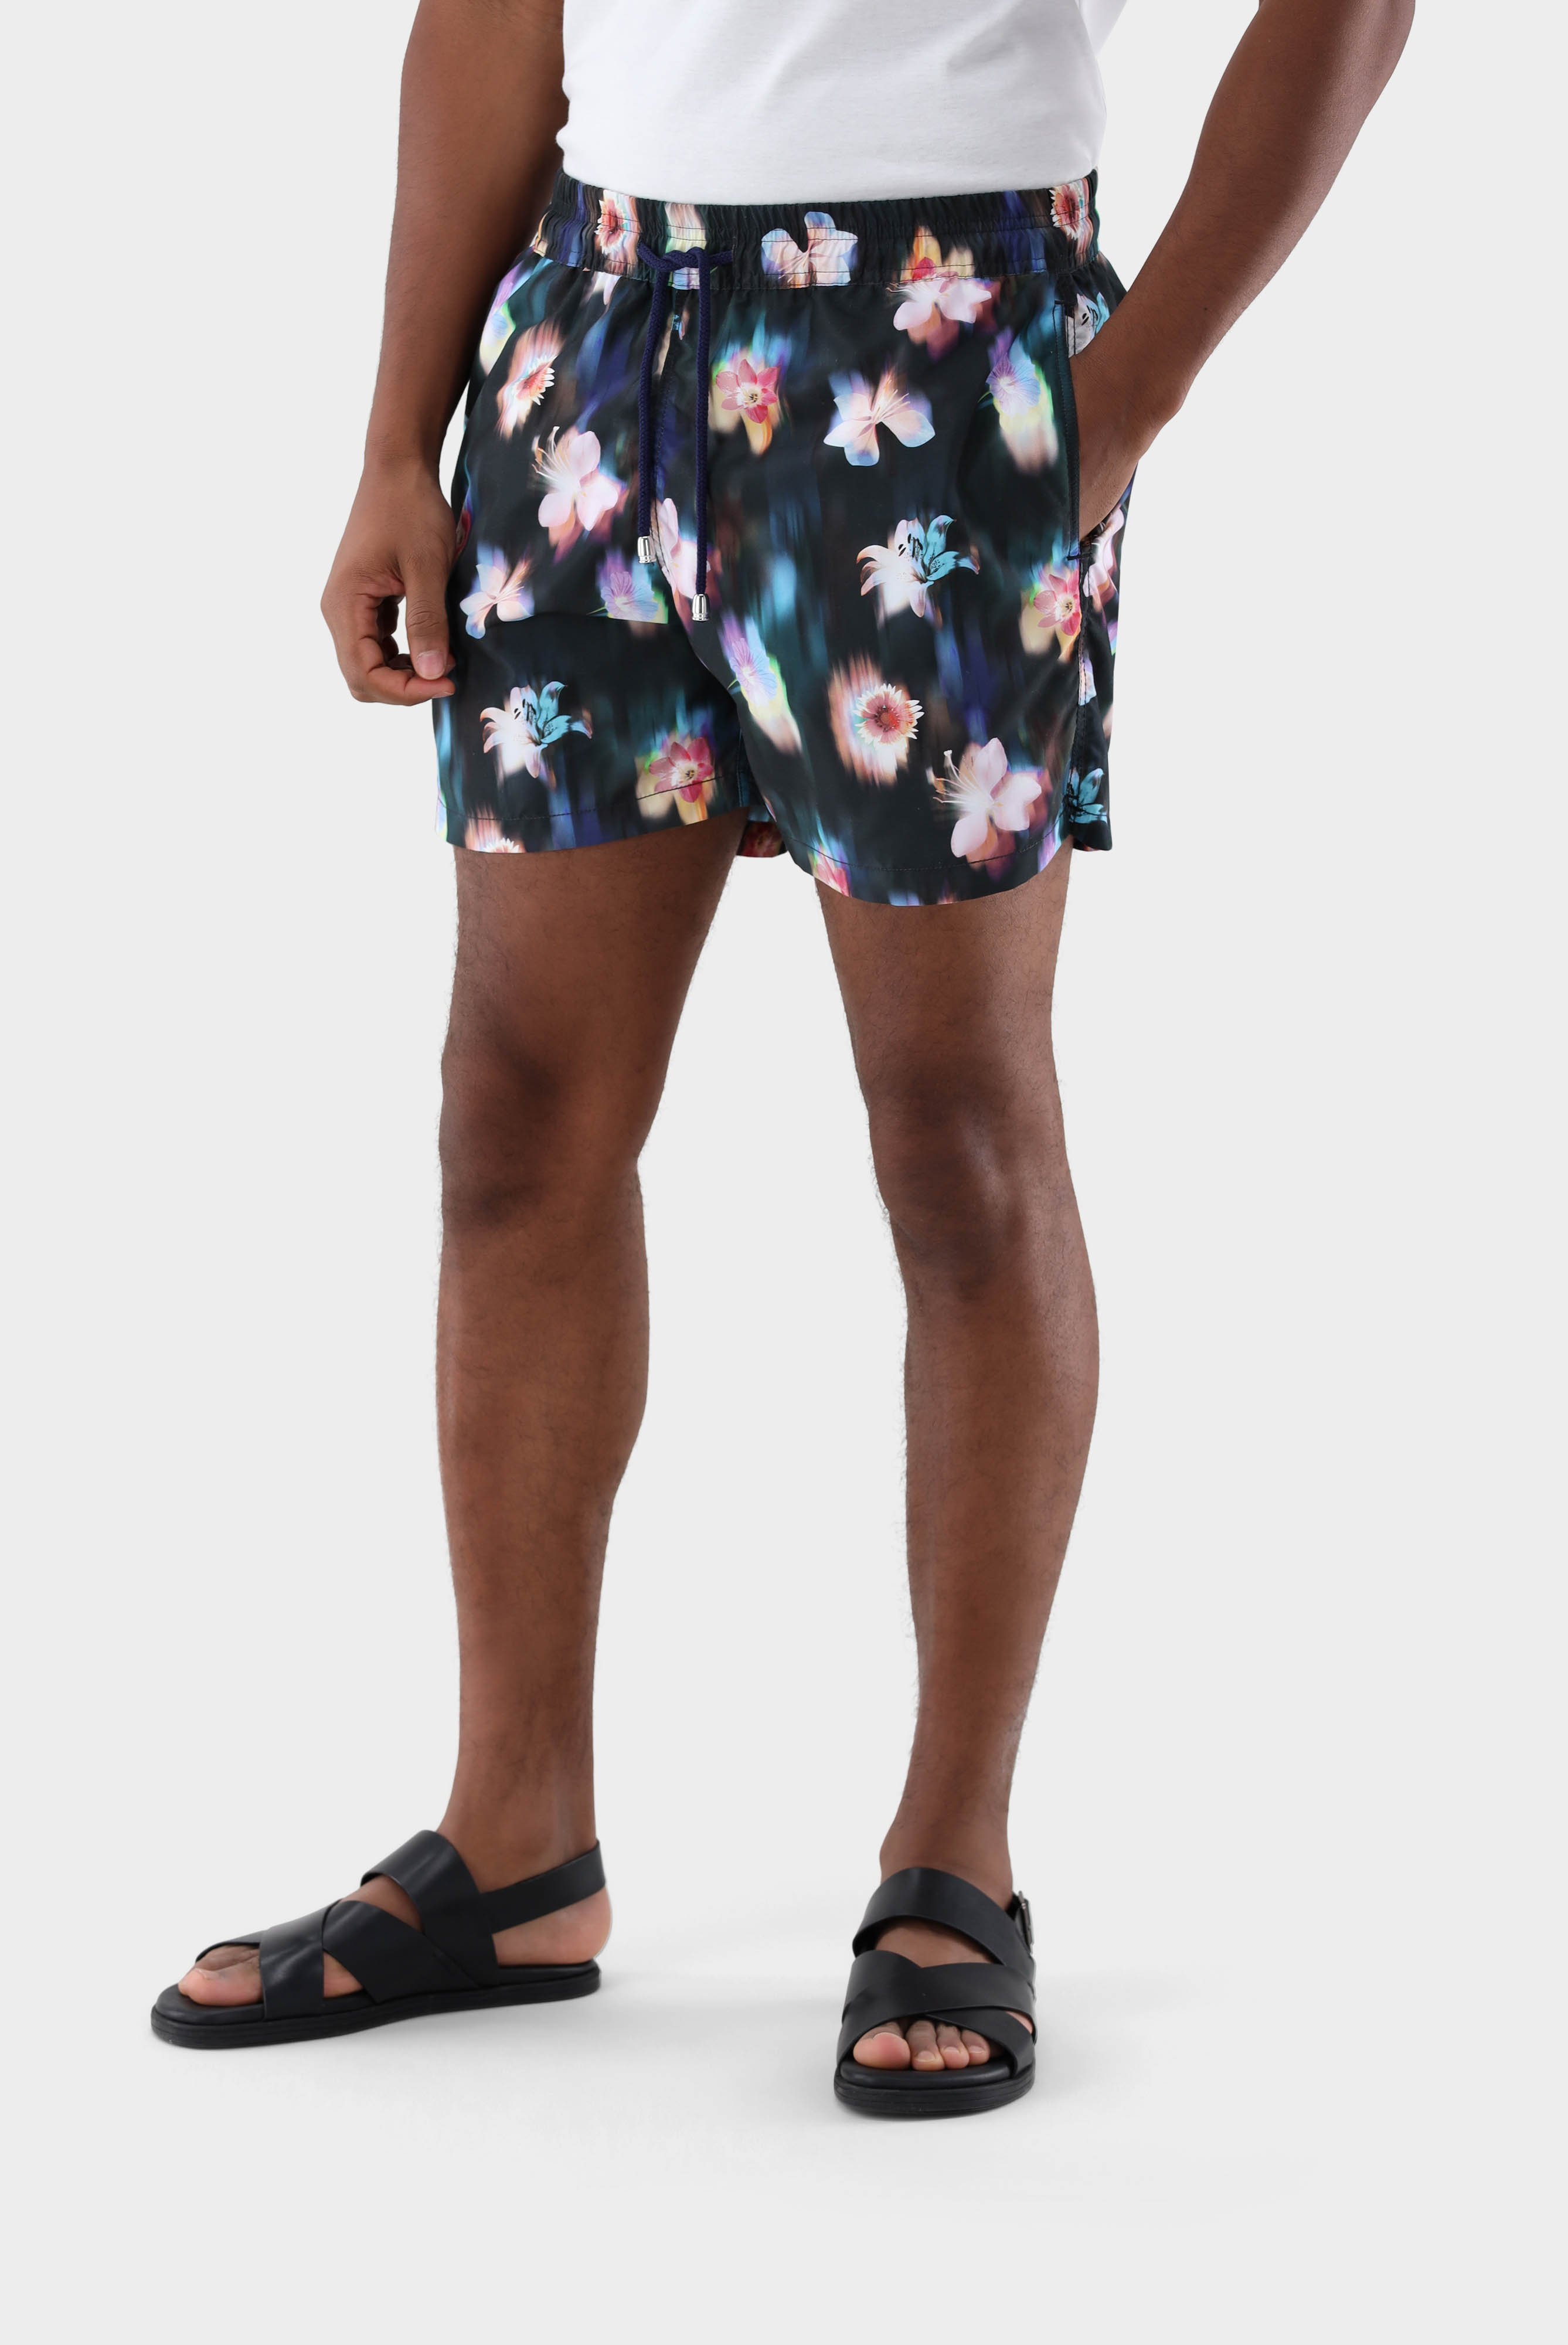 Swimwear+Swim Shorts with Floral Print+91.1179..170746.783.46